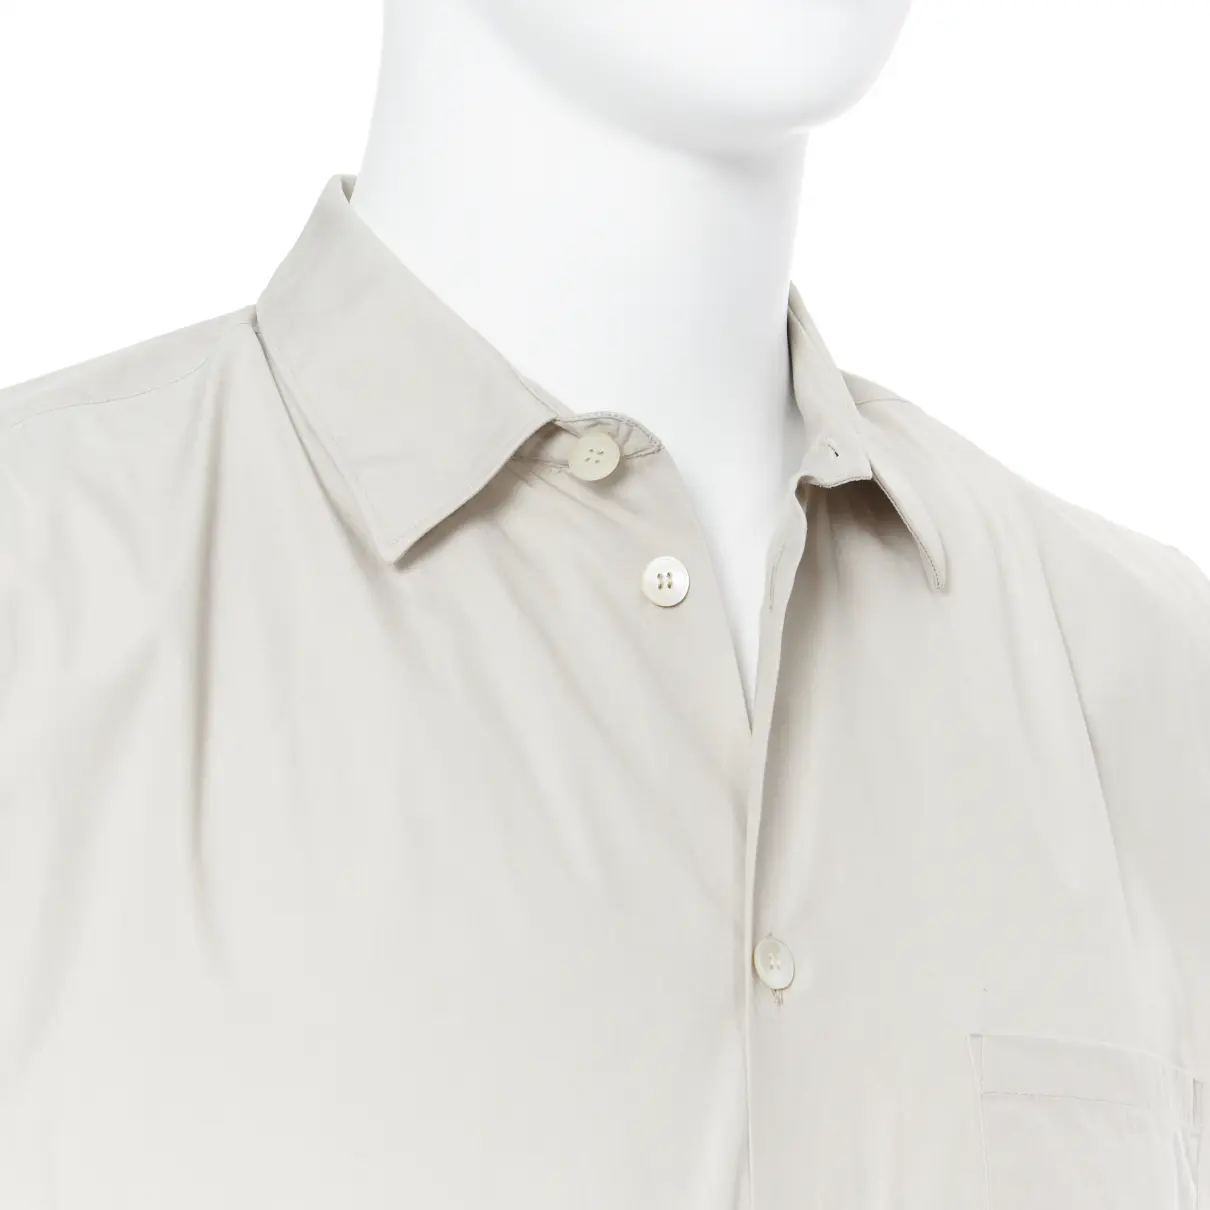 Buy Helmut Lang Shirt online